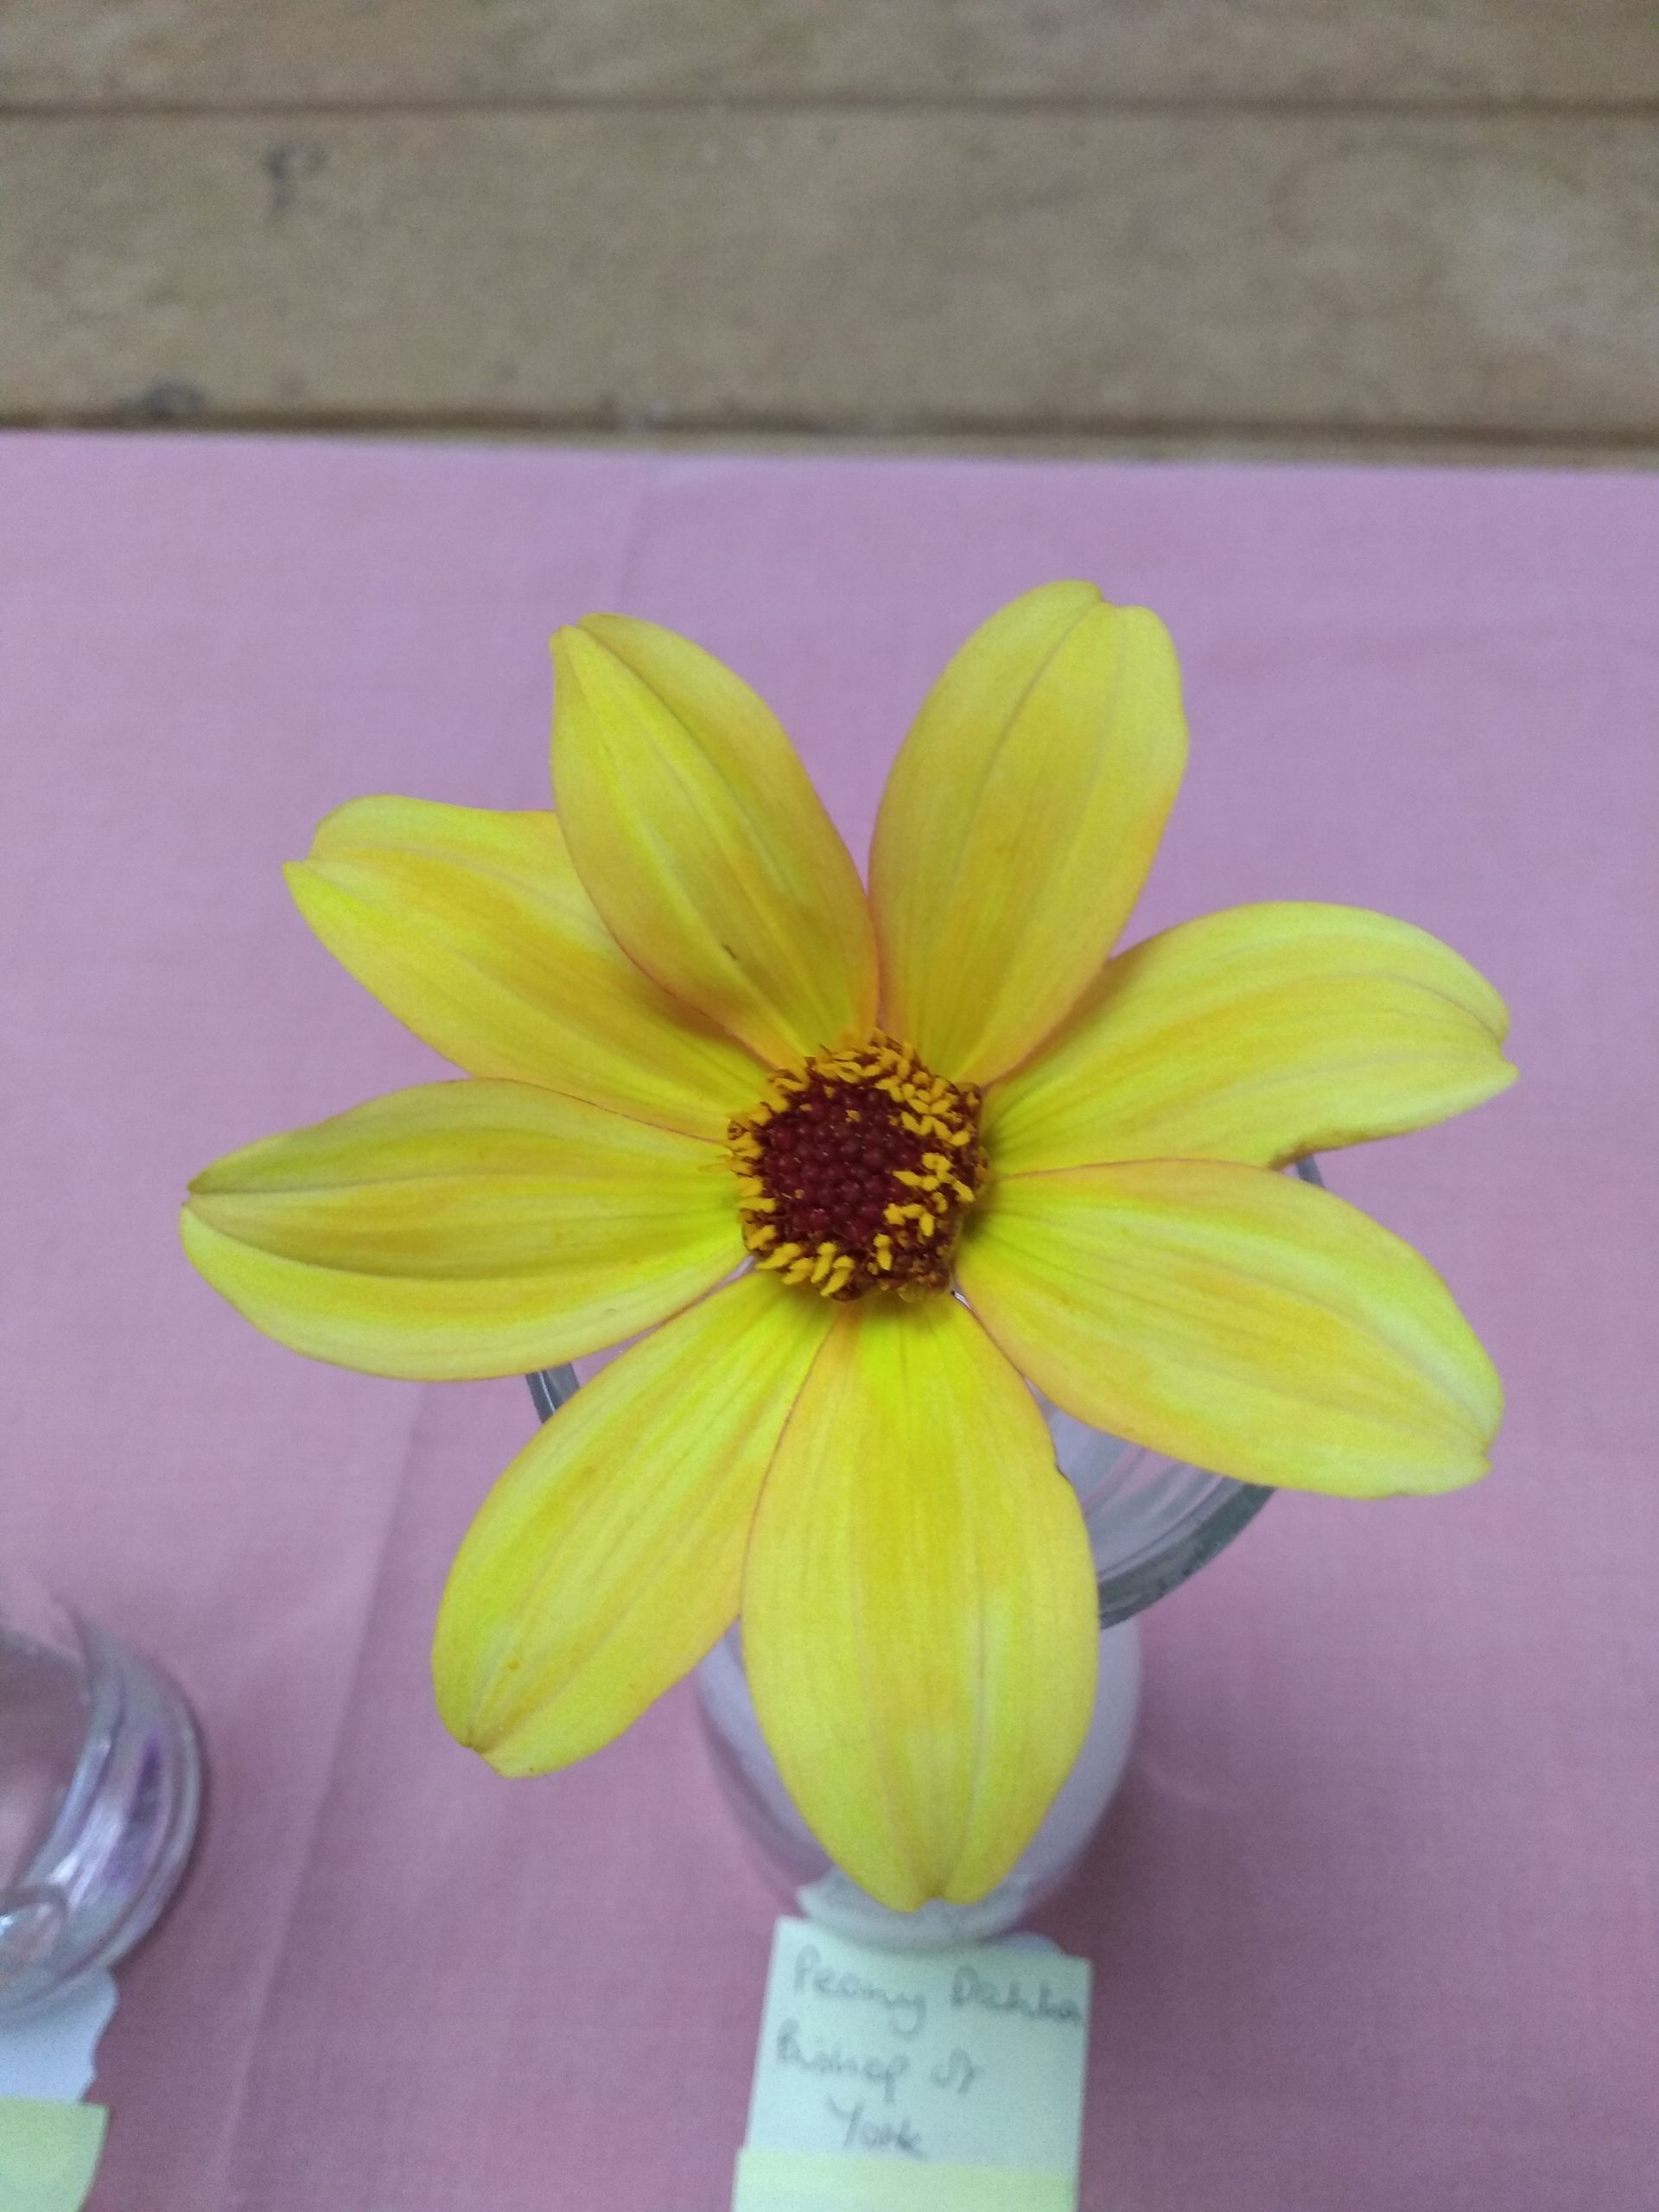 Dahlia 7, yellow